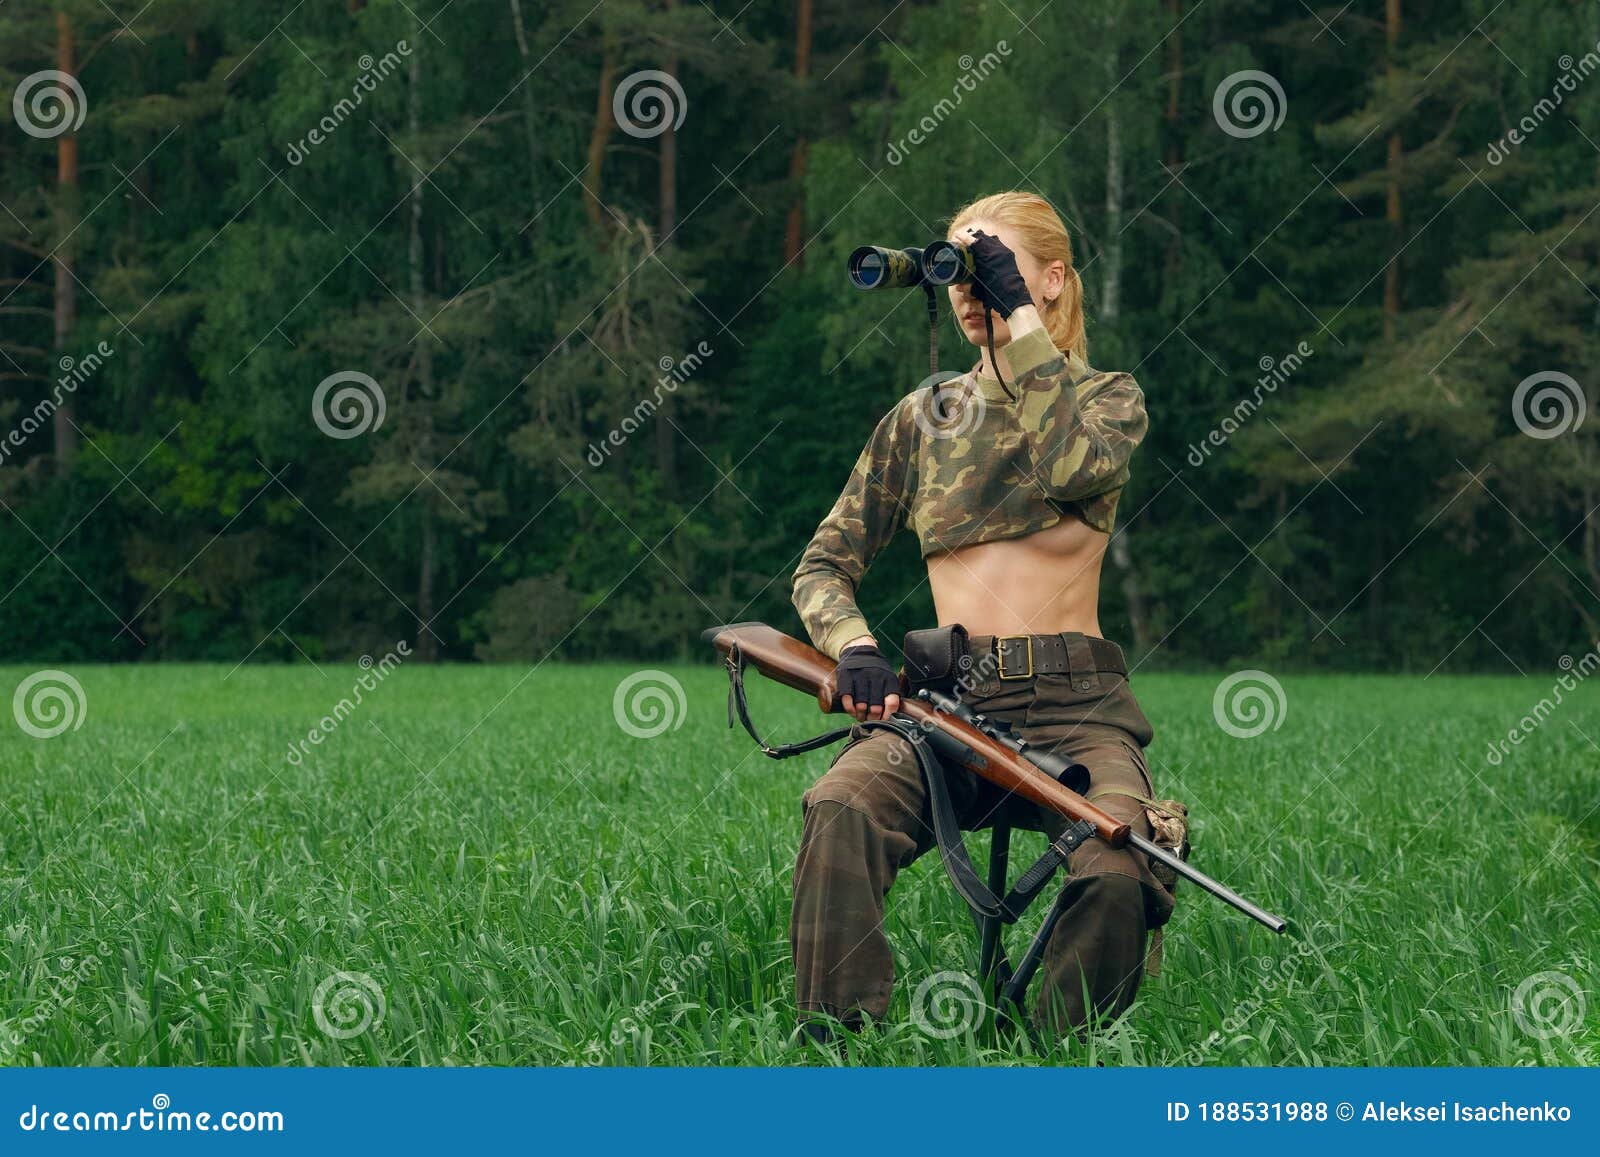 Naked Hunting Girls